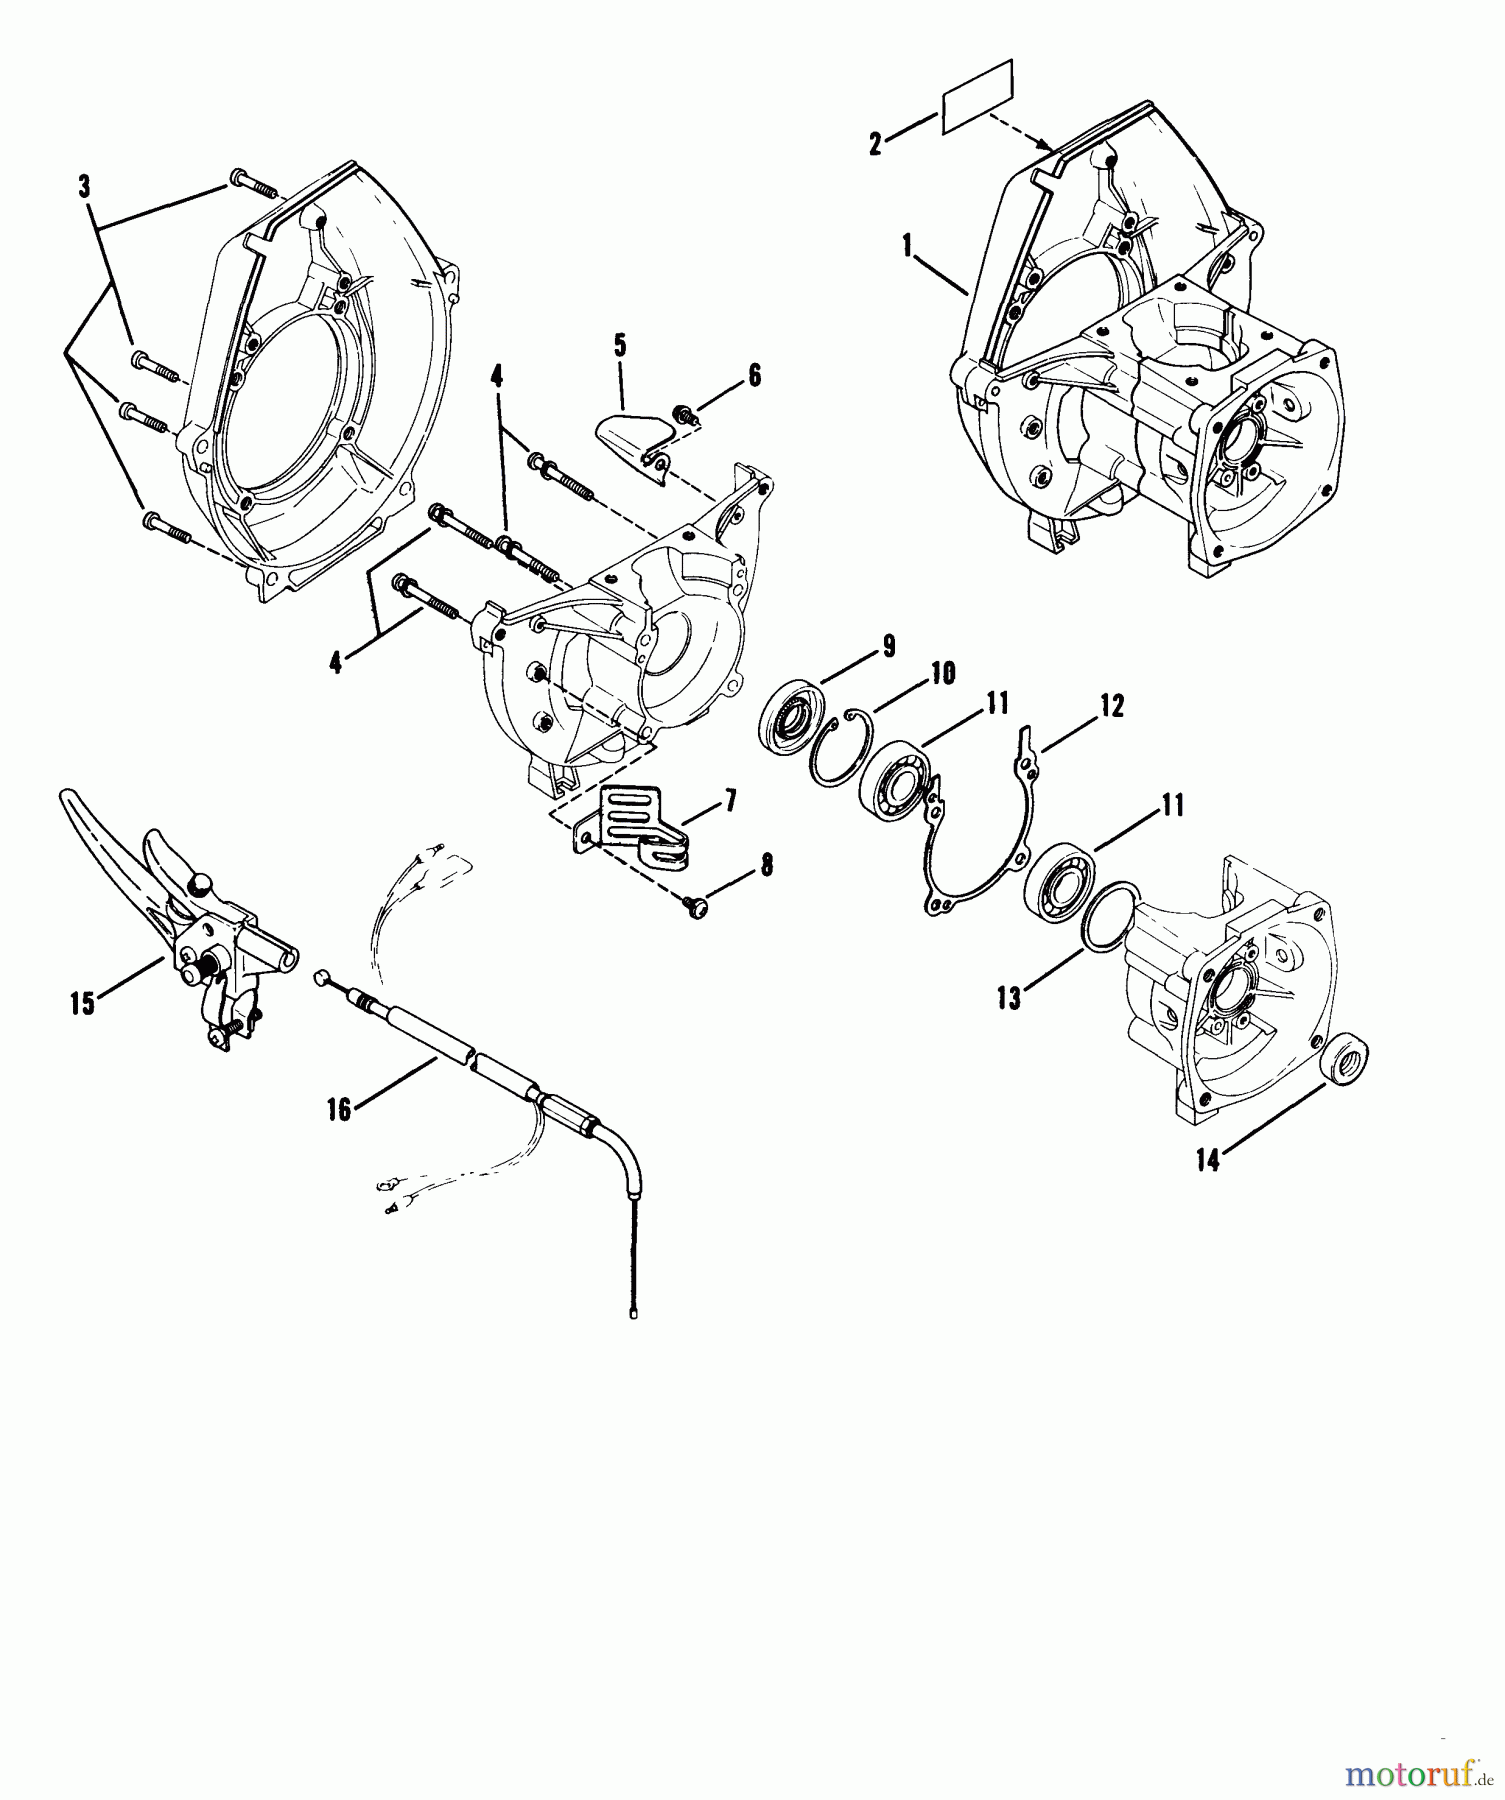  Snapper Trimmer, Motorsensen 410 - Snapper 40.6cc Straight Shaft Trimmer (86), Series 0 410 Crankcase Assembly